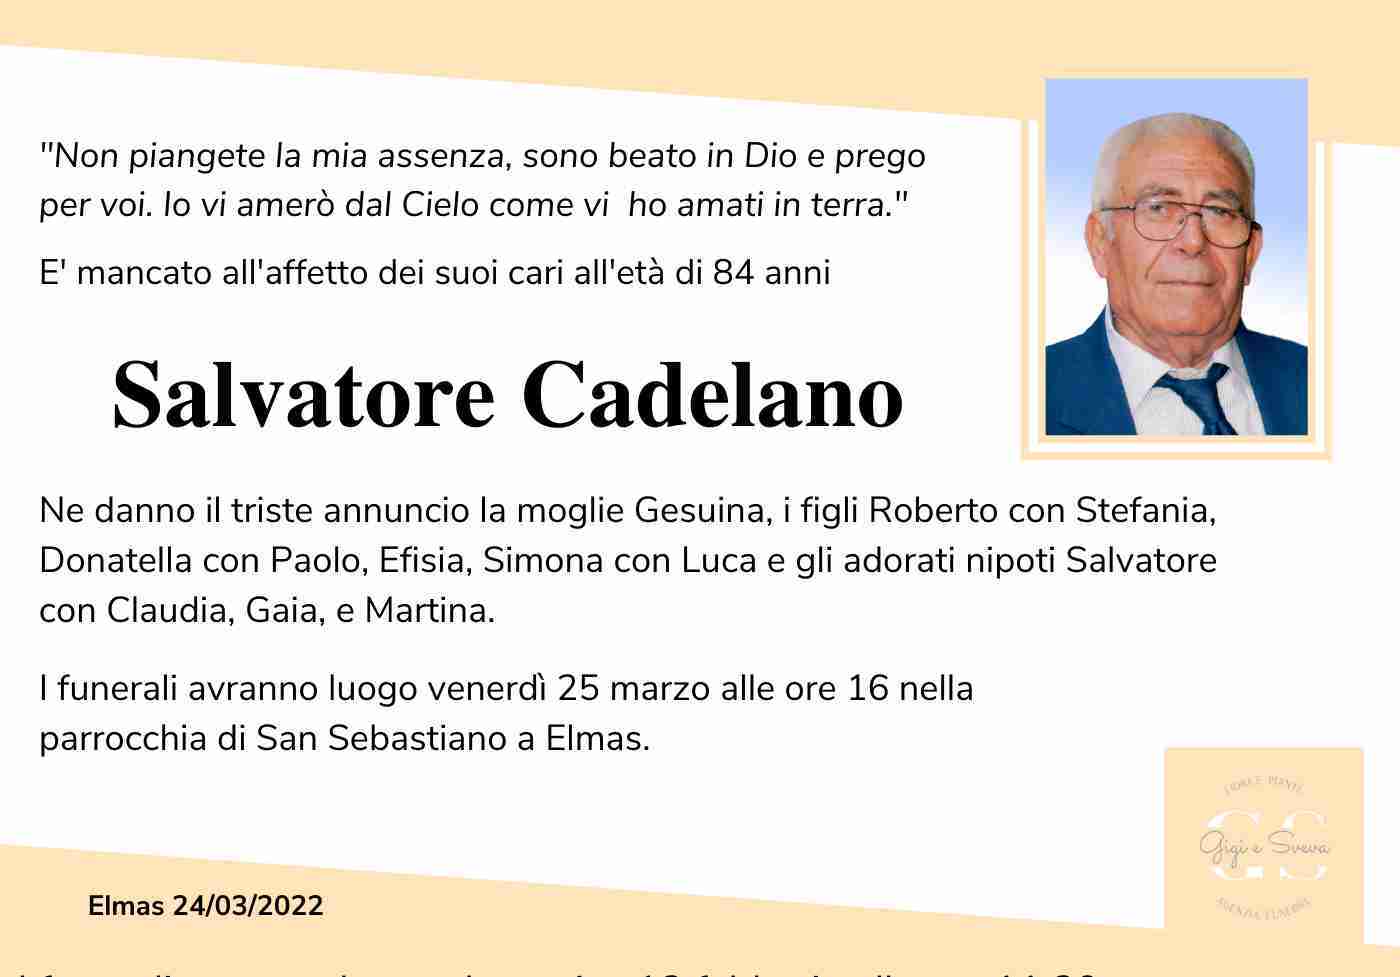 Salvatore Cadelano